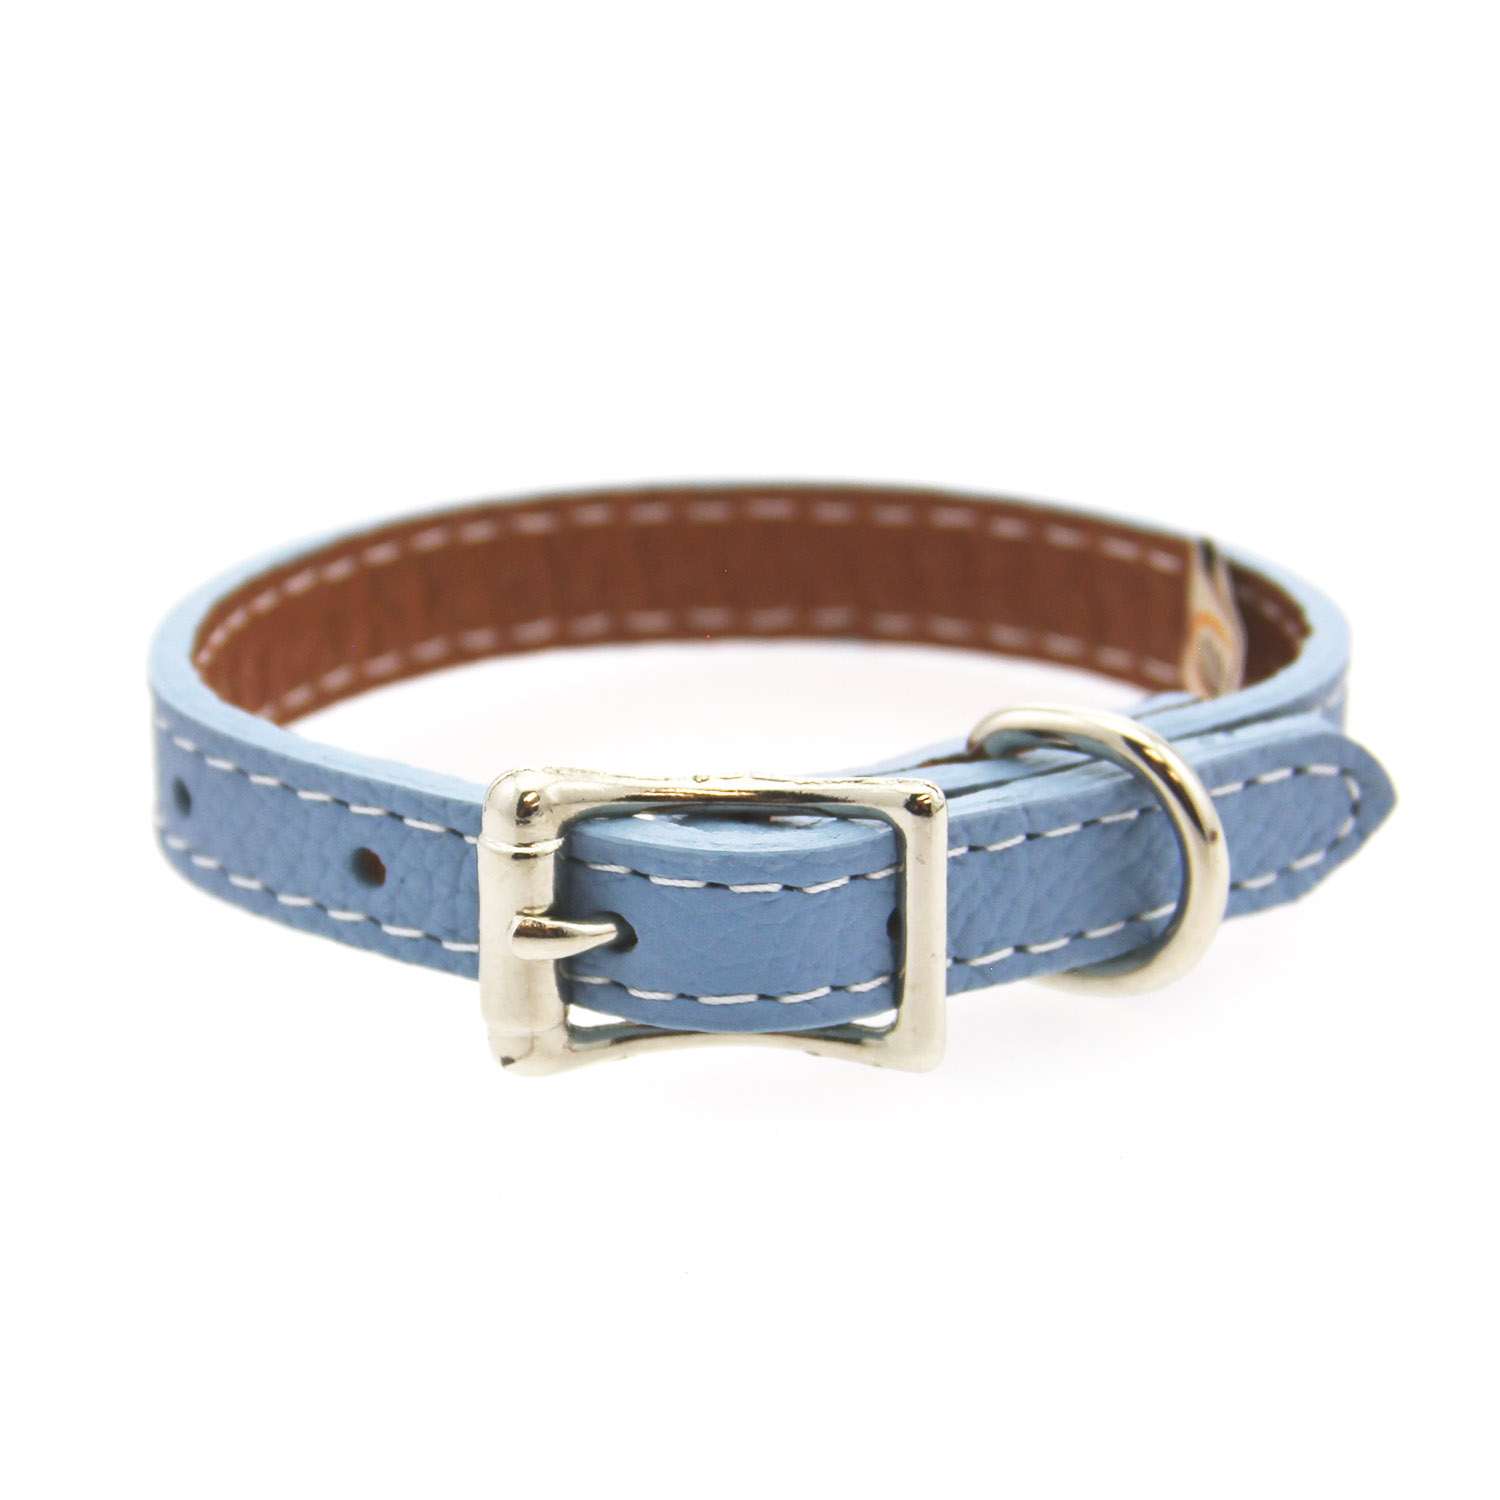 Auburn Leathercrafters Tuscan Leather Dog Collar - Light Blue